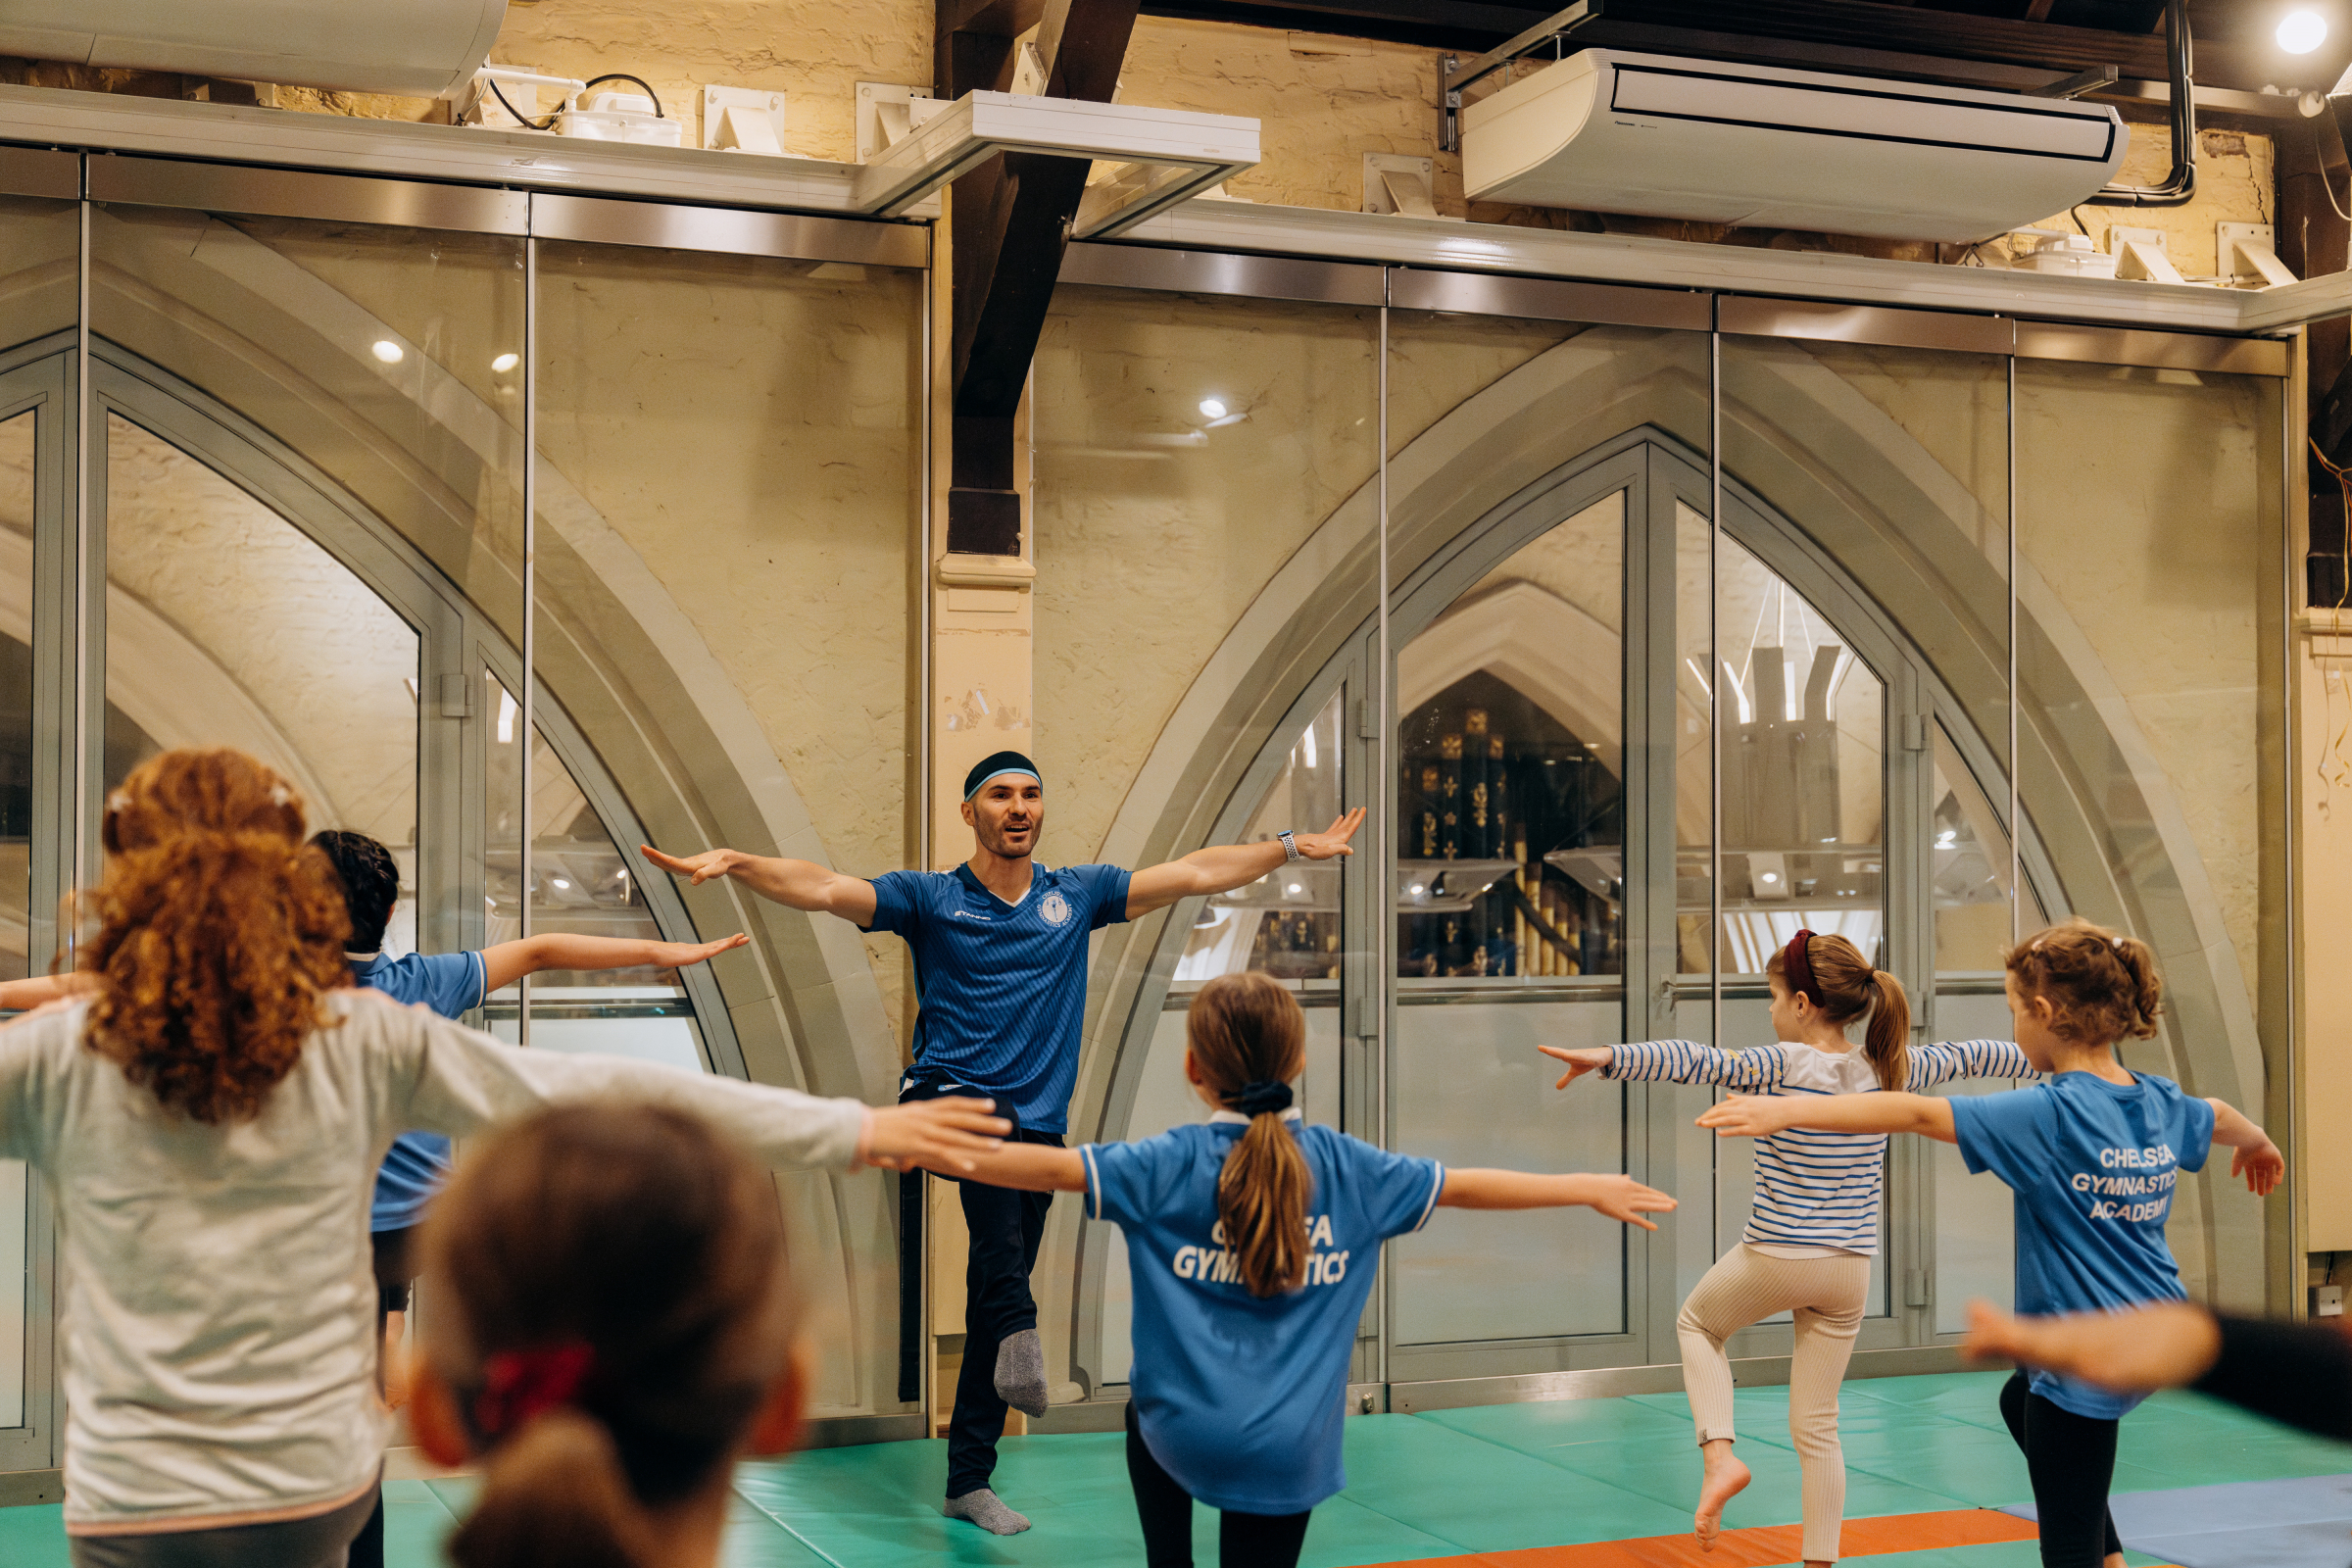 Coach Stefan teaching gymnastics at Chelsea Gymnastics Academy in Kensington London